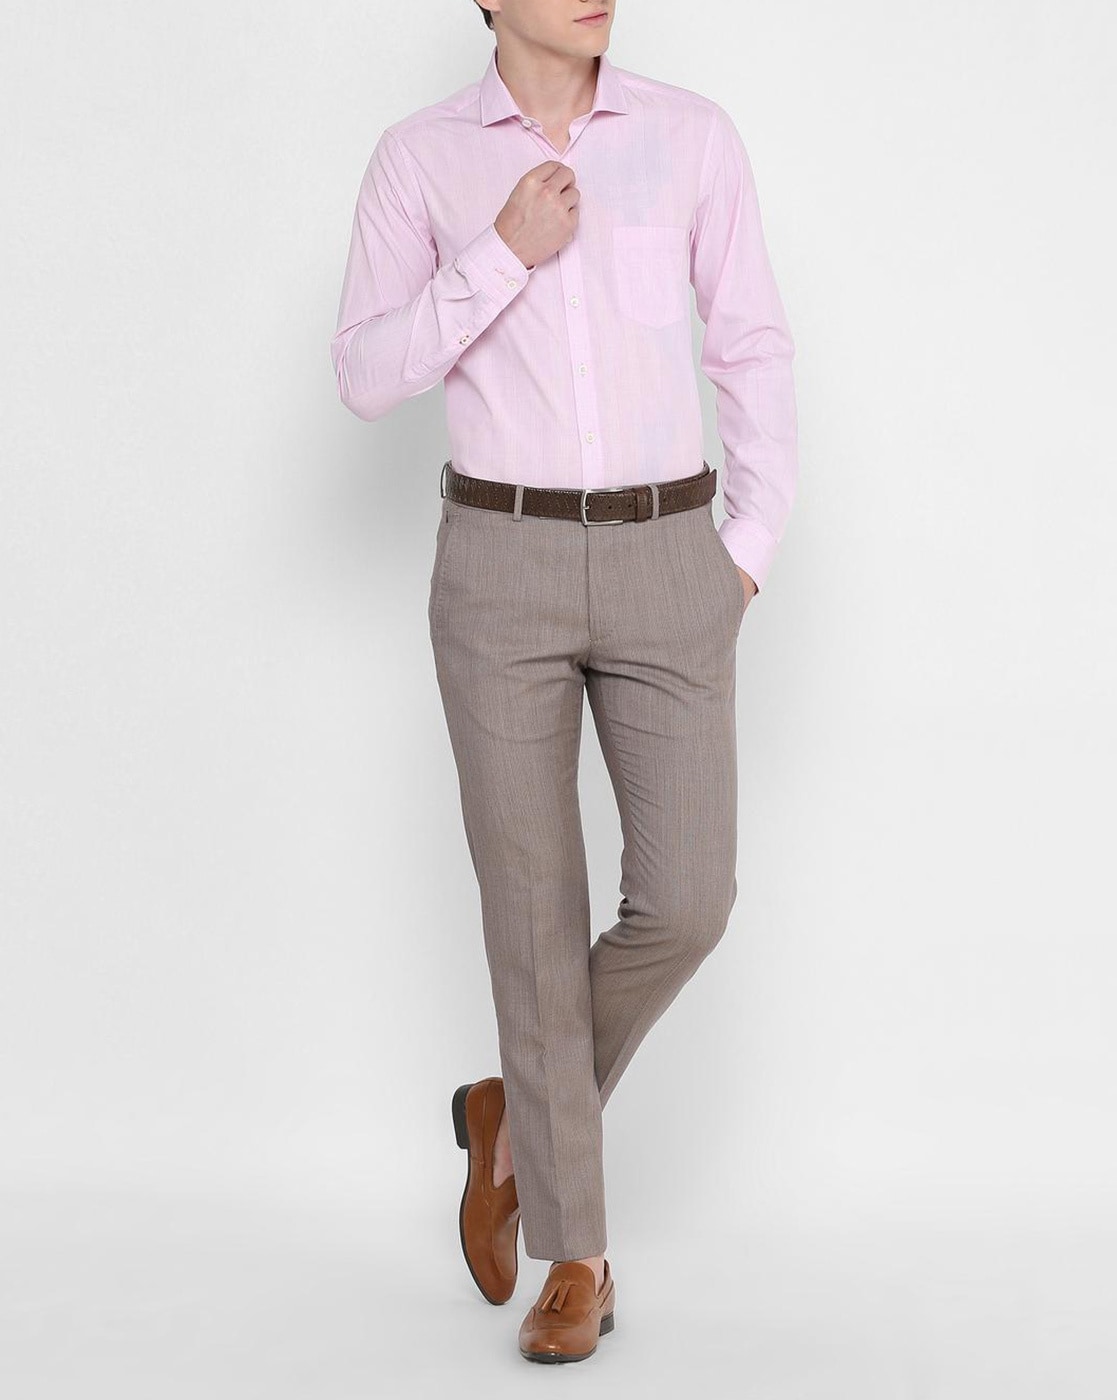 grey cargo pants with pink shirt｜TikTok Search